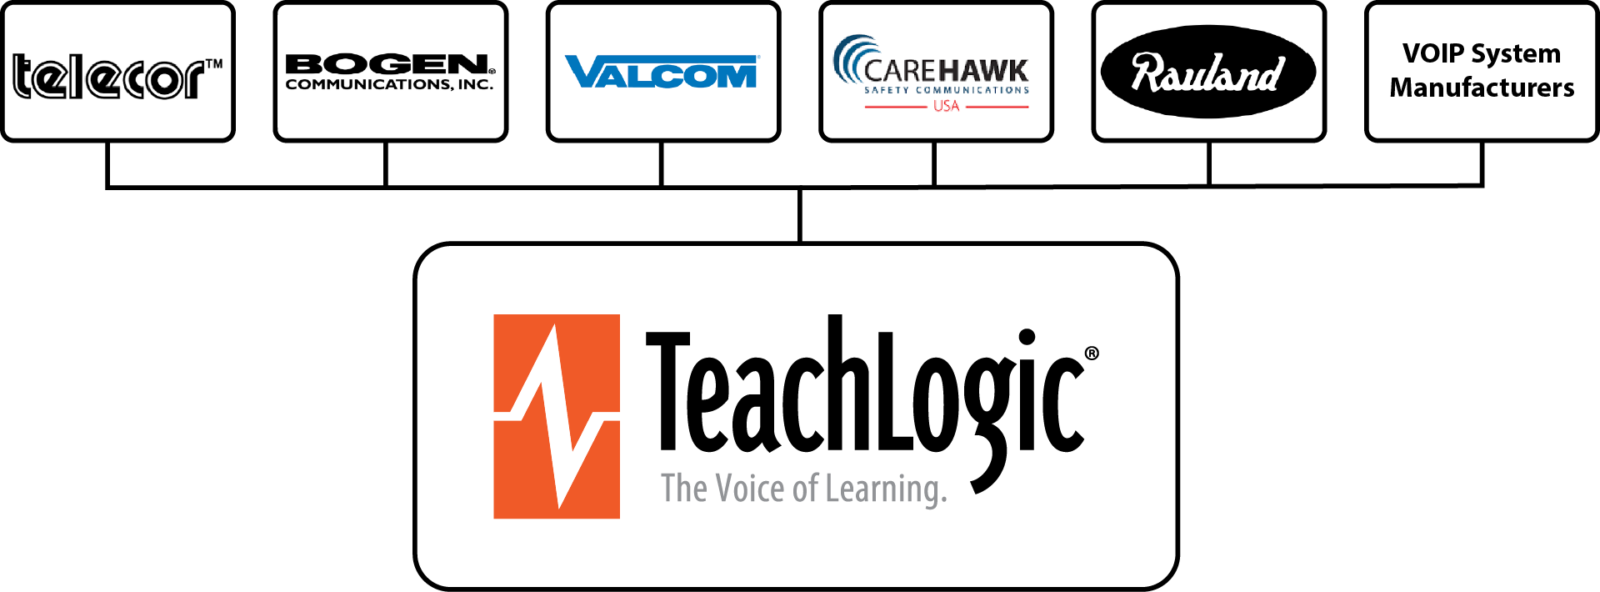 TeachLogic Intercom Integration Partners Ordered